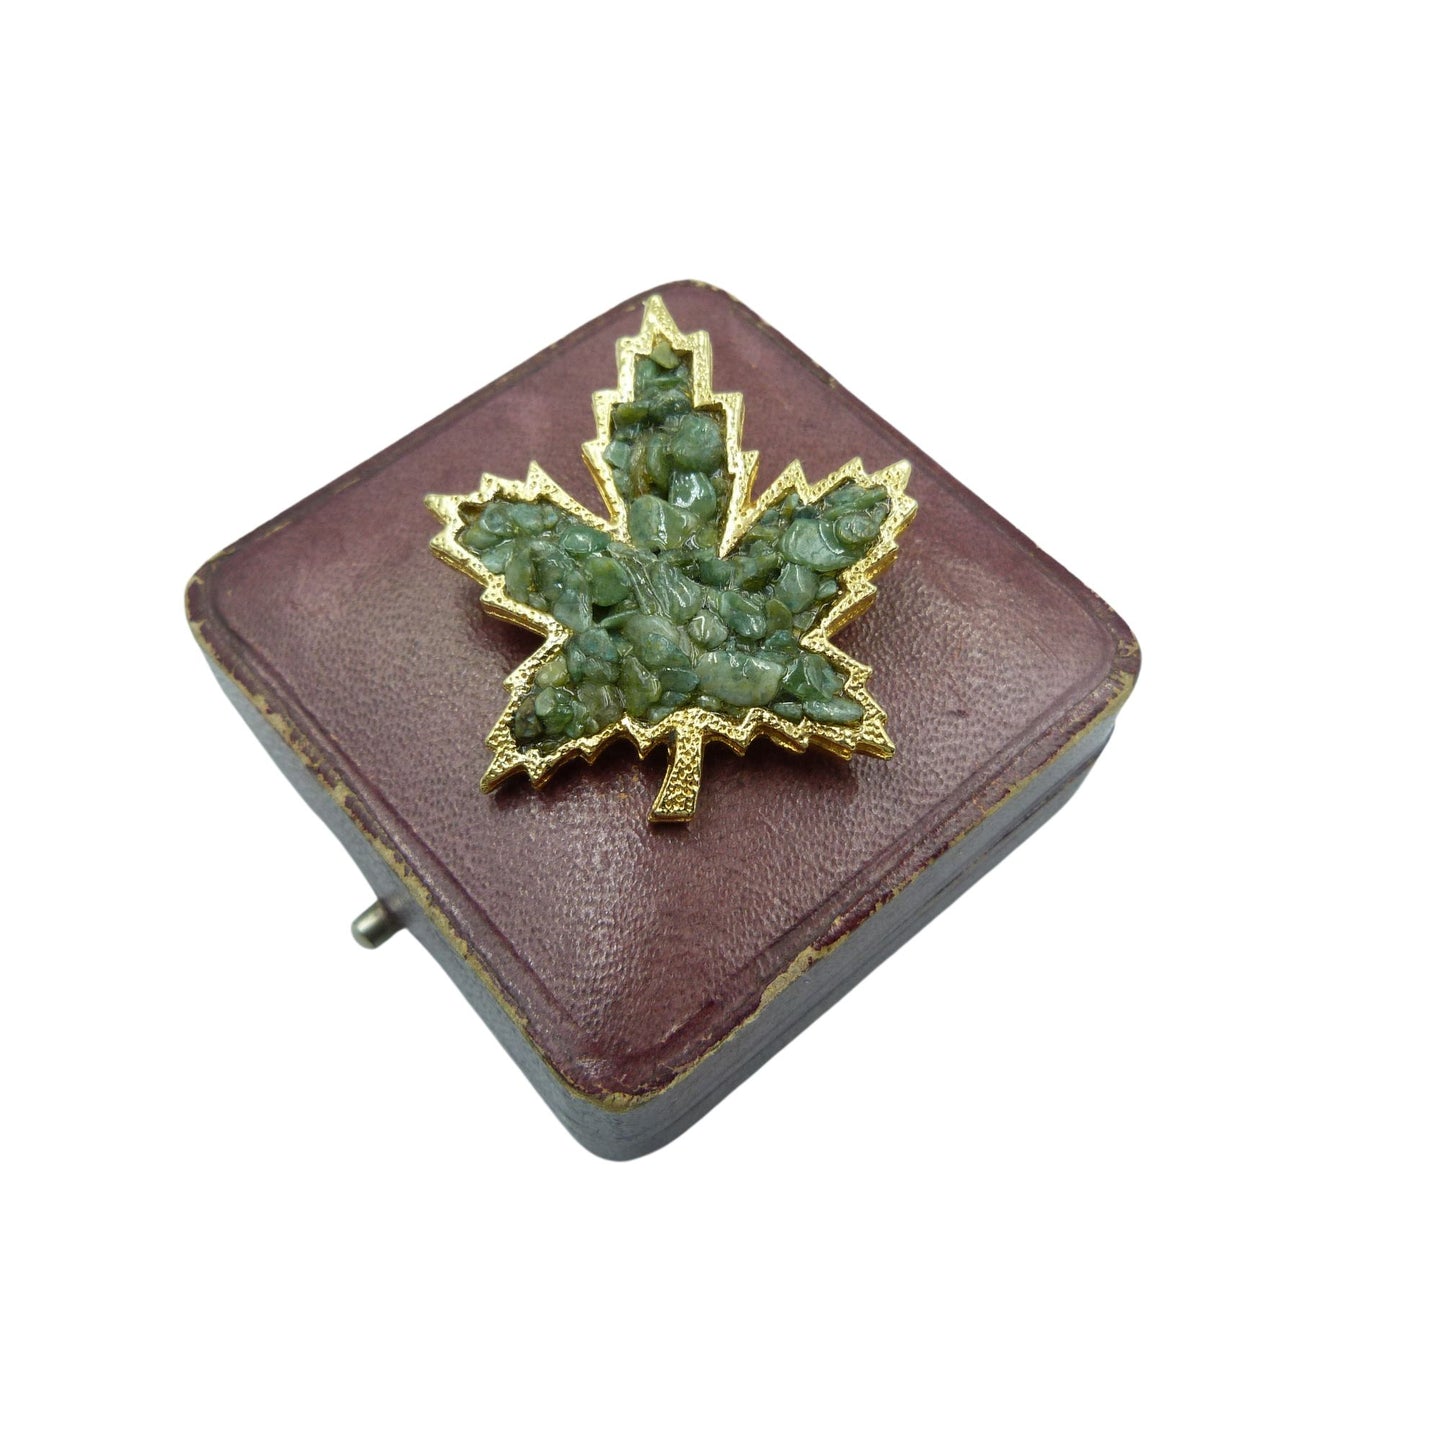 Vintage Green Jade Chip Maple Leaf brooch